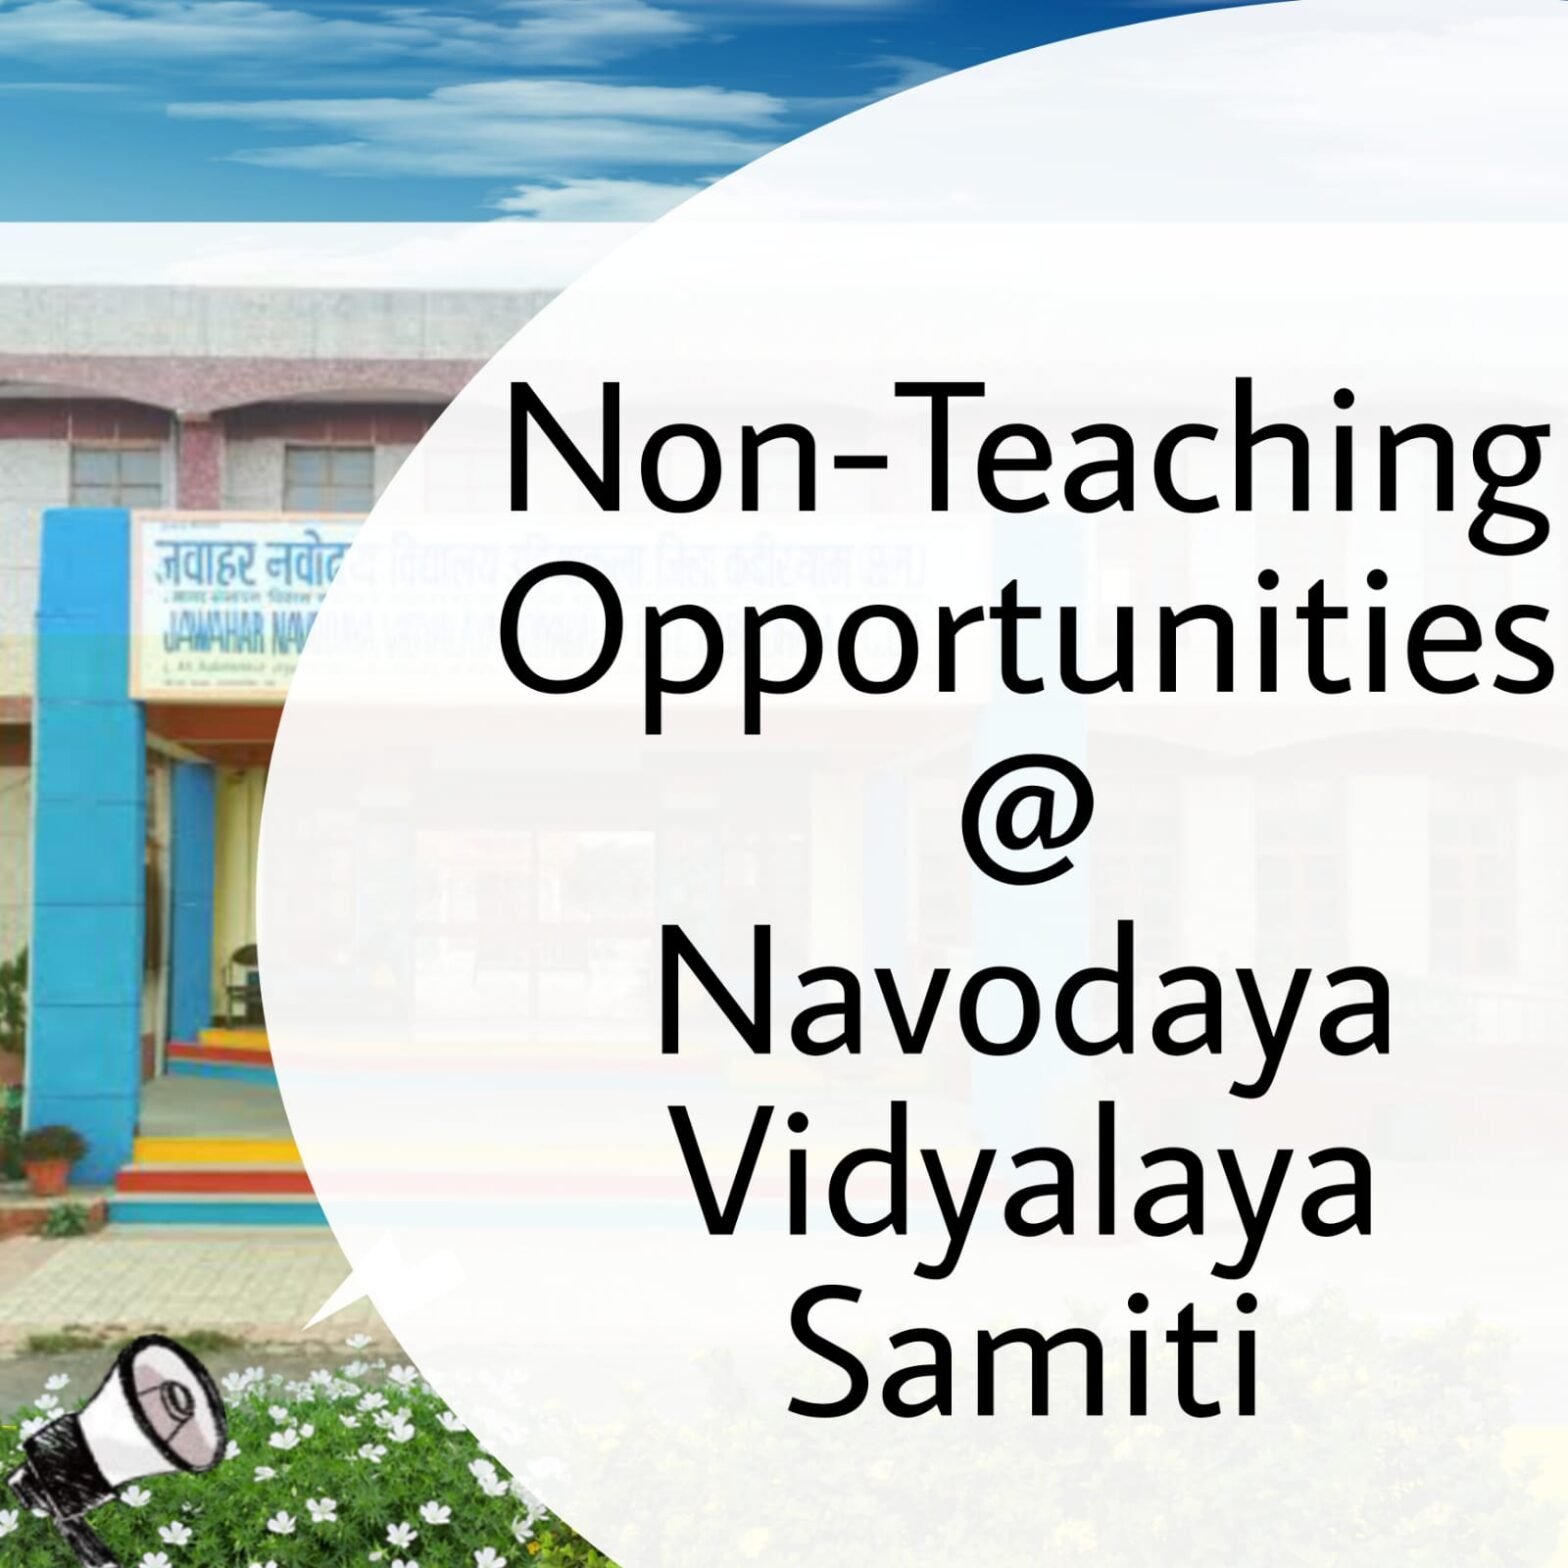 Non-Teaching Opportunities at Navodaya Vidyalayas